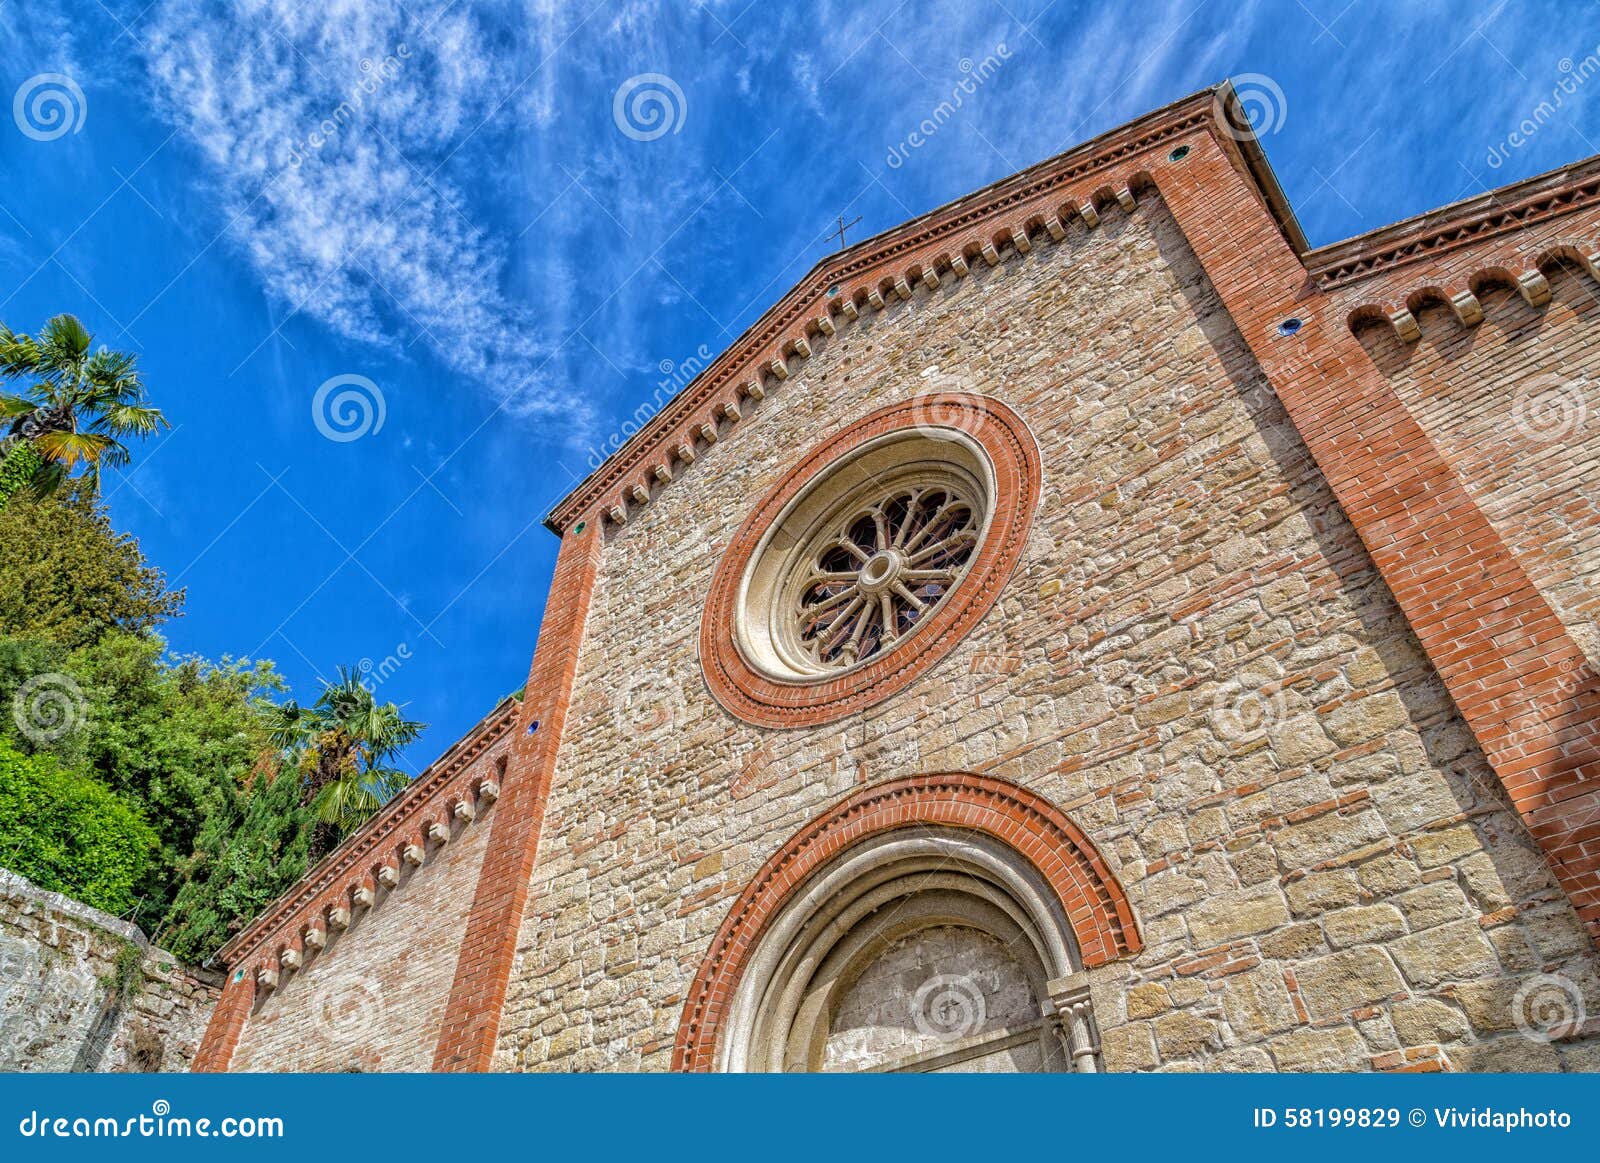 facade of xiv catholics parish church in italy